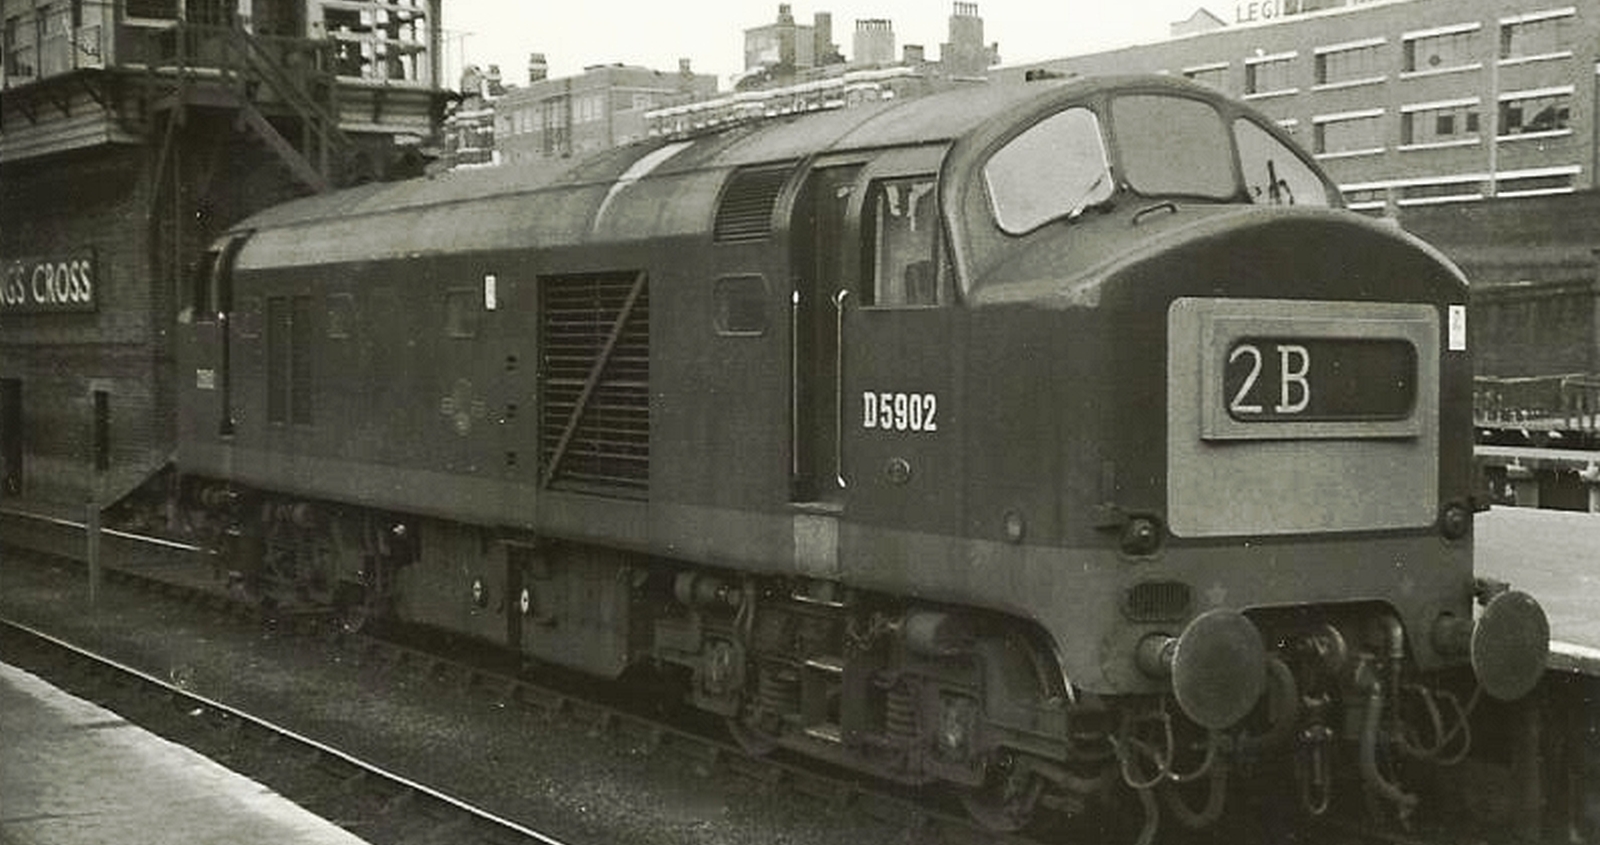 D5902 in June 1966 at London King's Cross